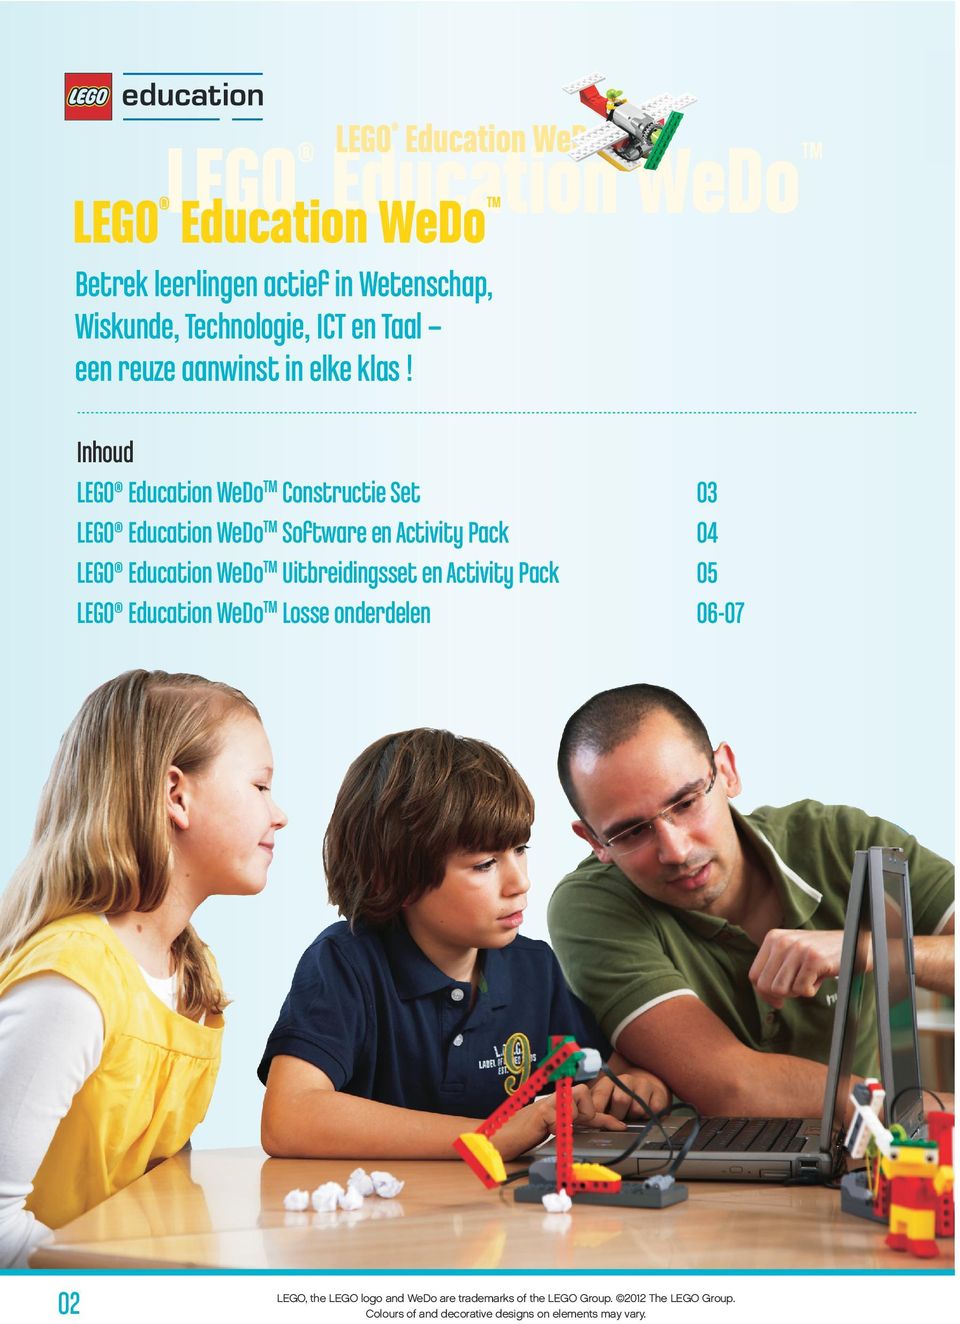 Education WeDo TM Uitbreidingsset en Activity Pack 05 LEGO Education WeDo TM Losse onderdelen 06-07 02 LEGO, the